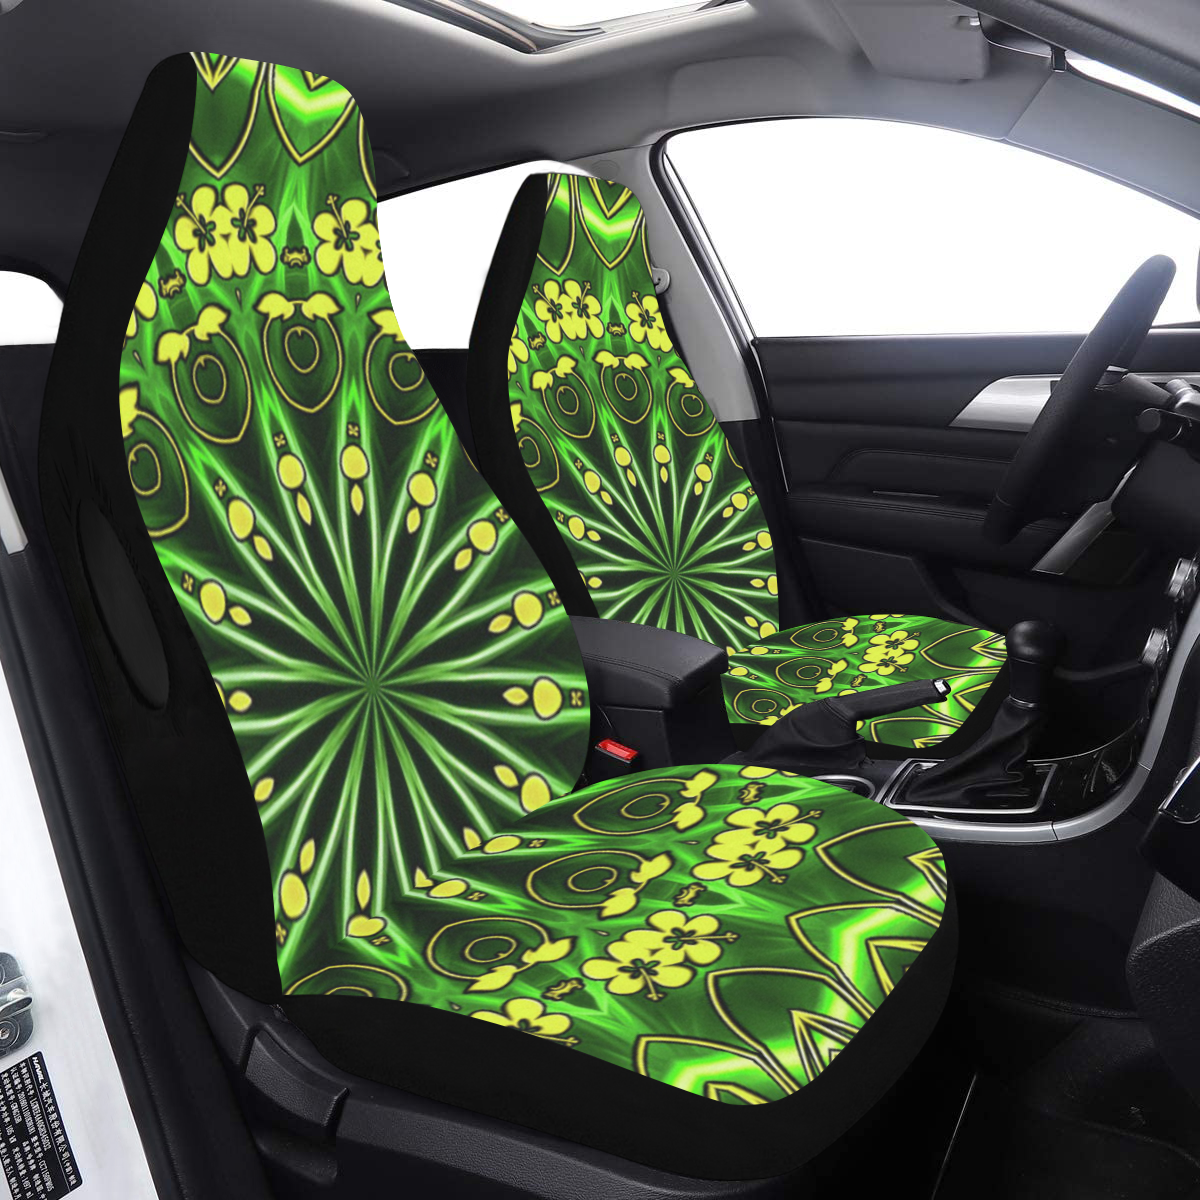 MANDALA GARDEN OF EDEN Car Seat Cover Airbag Compatible (Set of 2)